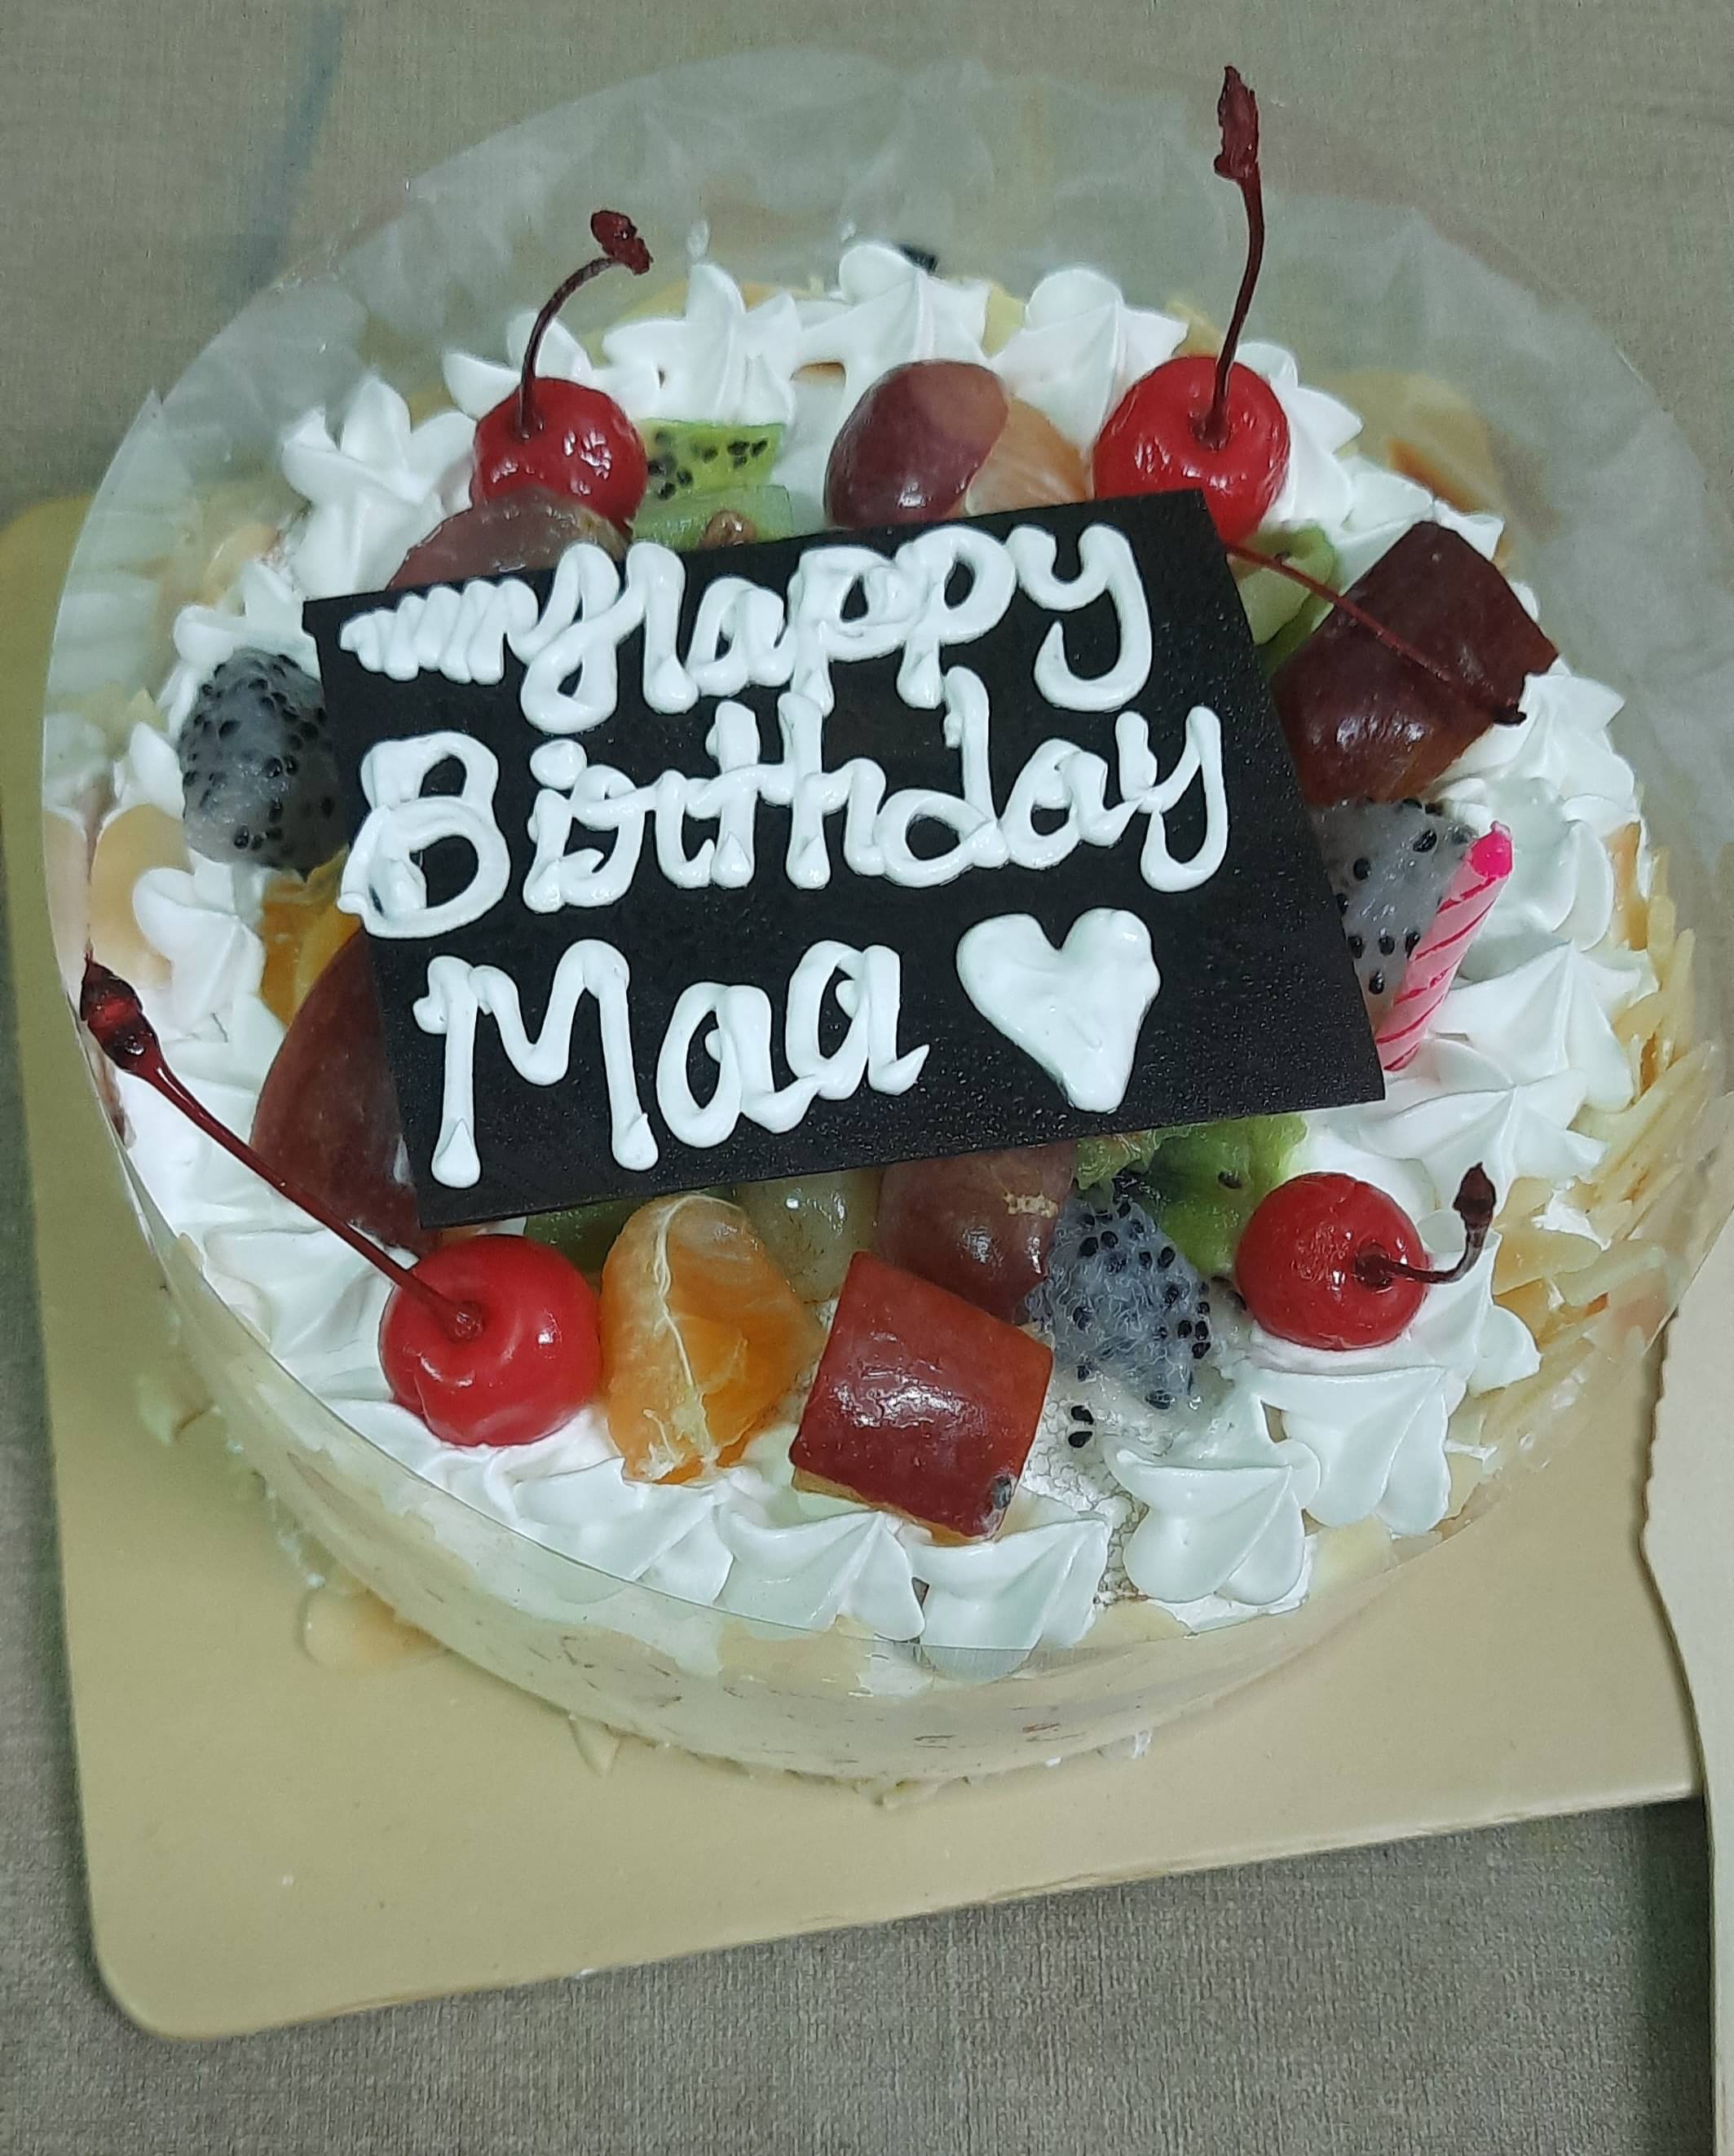 Meri maa 😆 This beautiful cake was... - Poo's cake story | Facebook